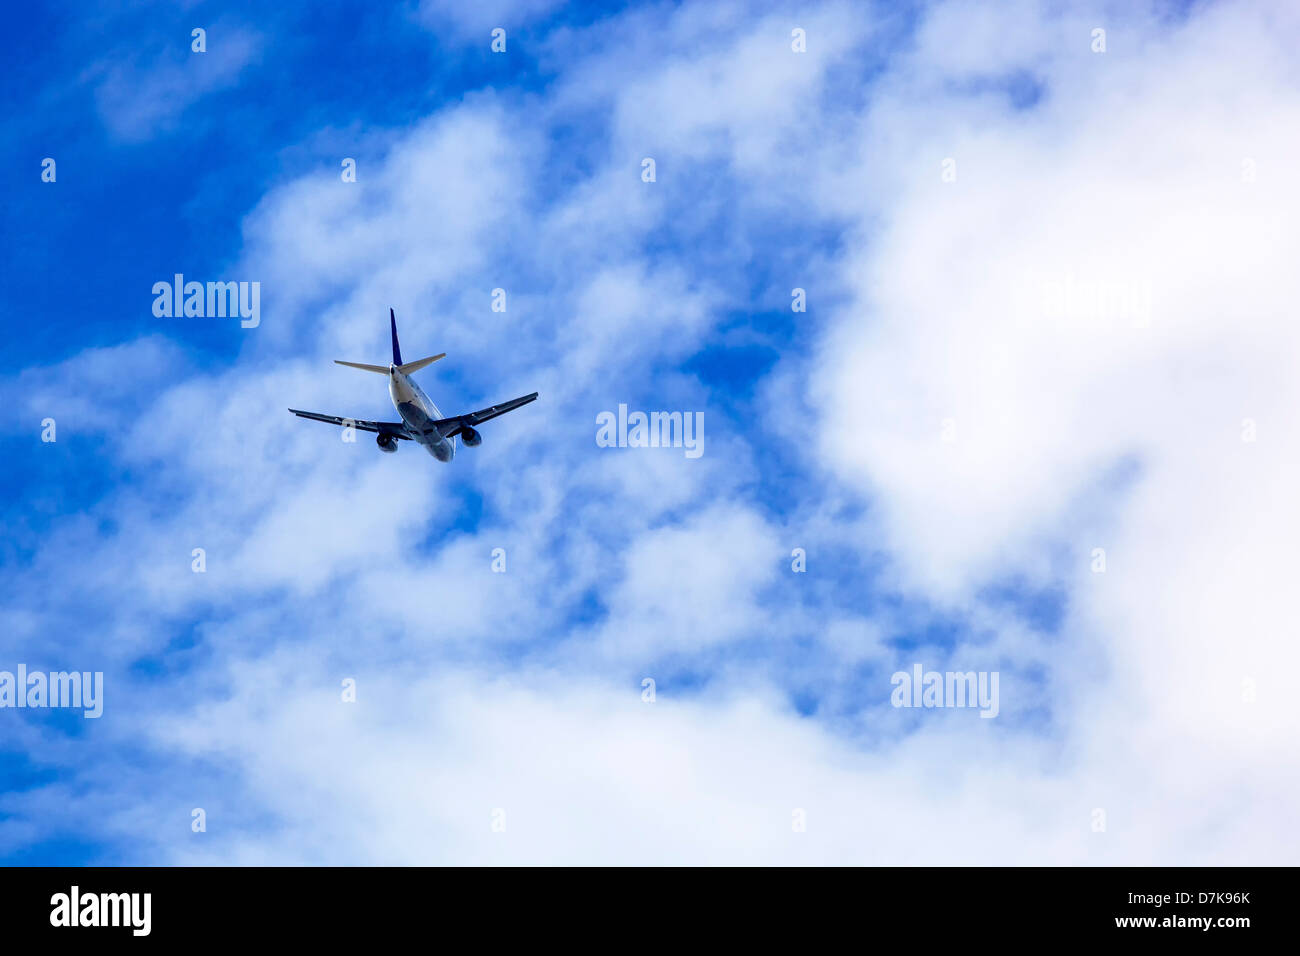 Austria, Passenger plane taking off Stock Photo